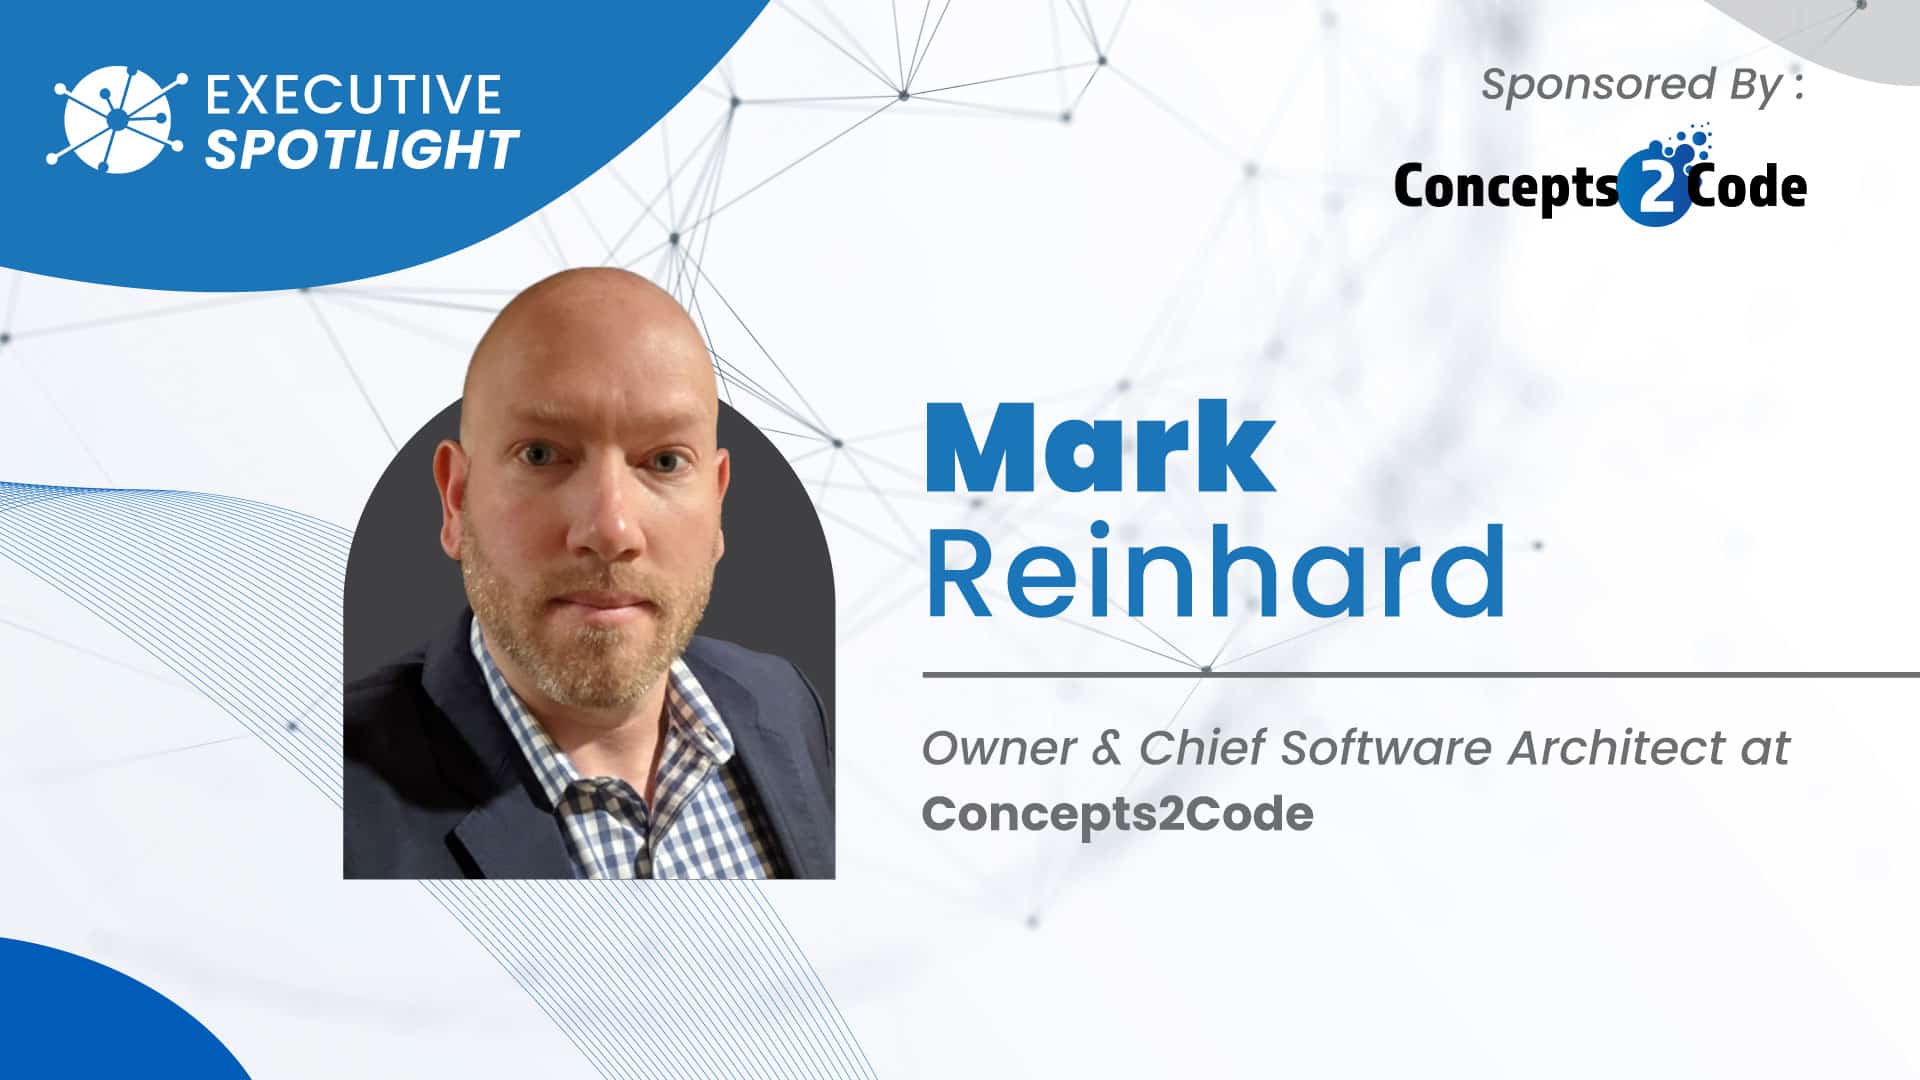 Executive Spotlight with Mark Reinhard